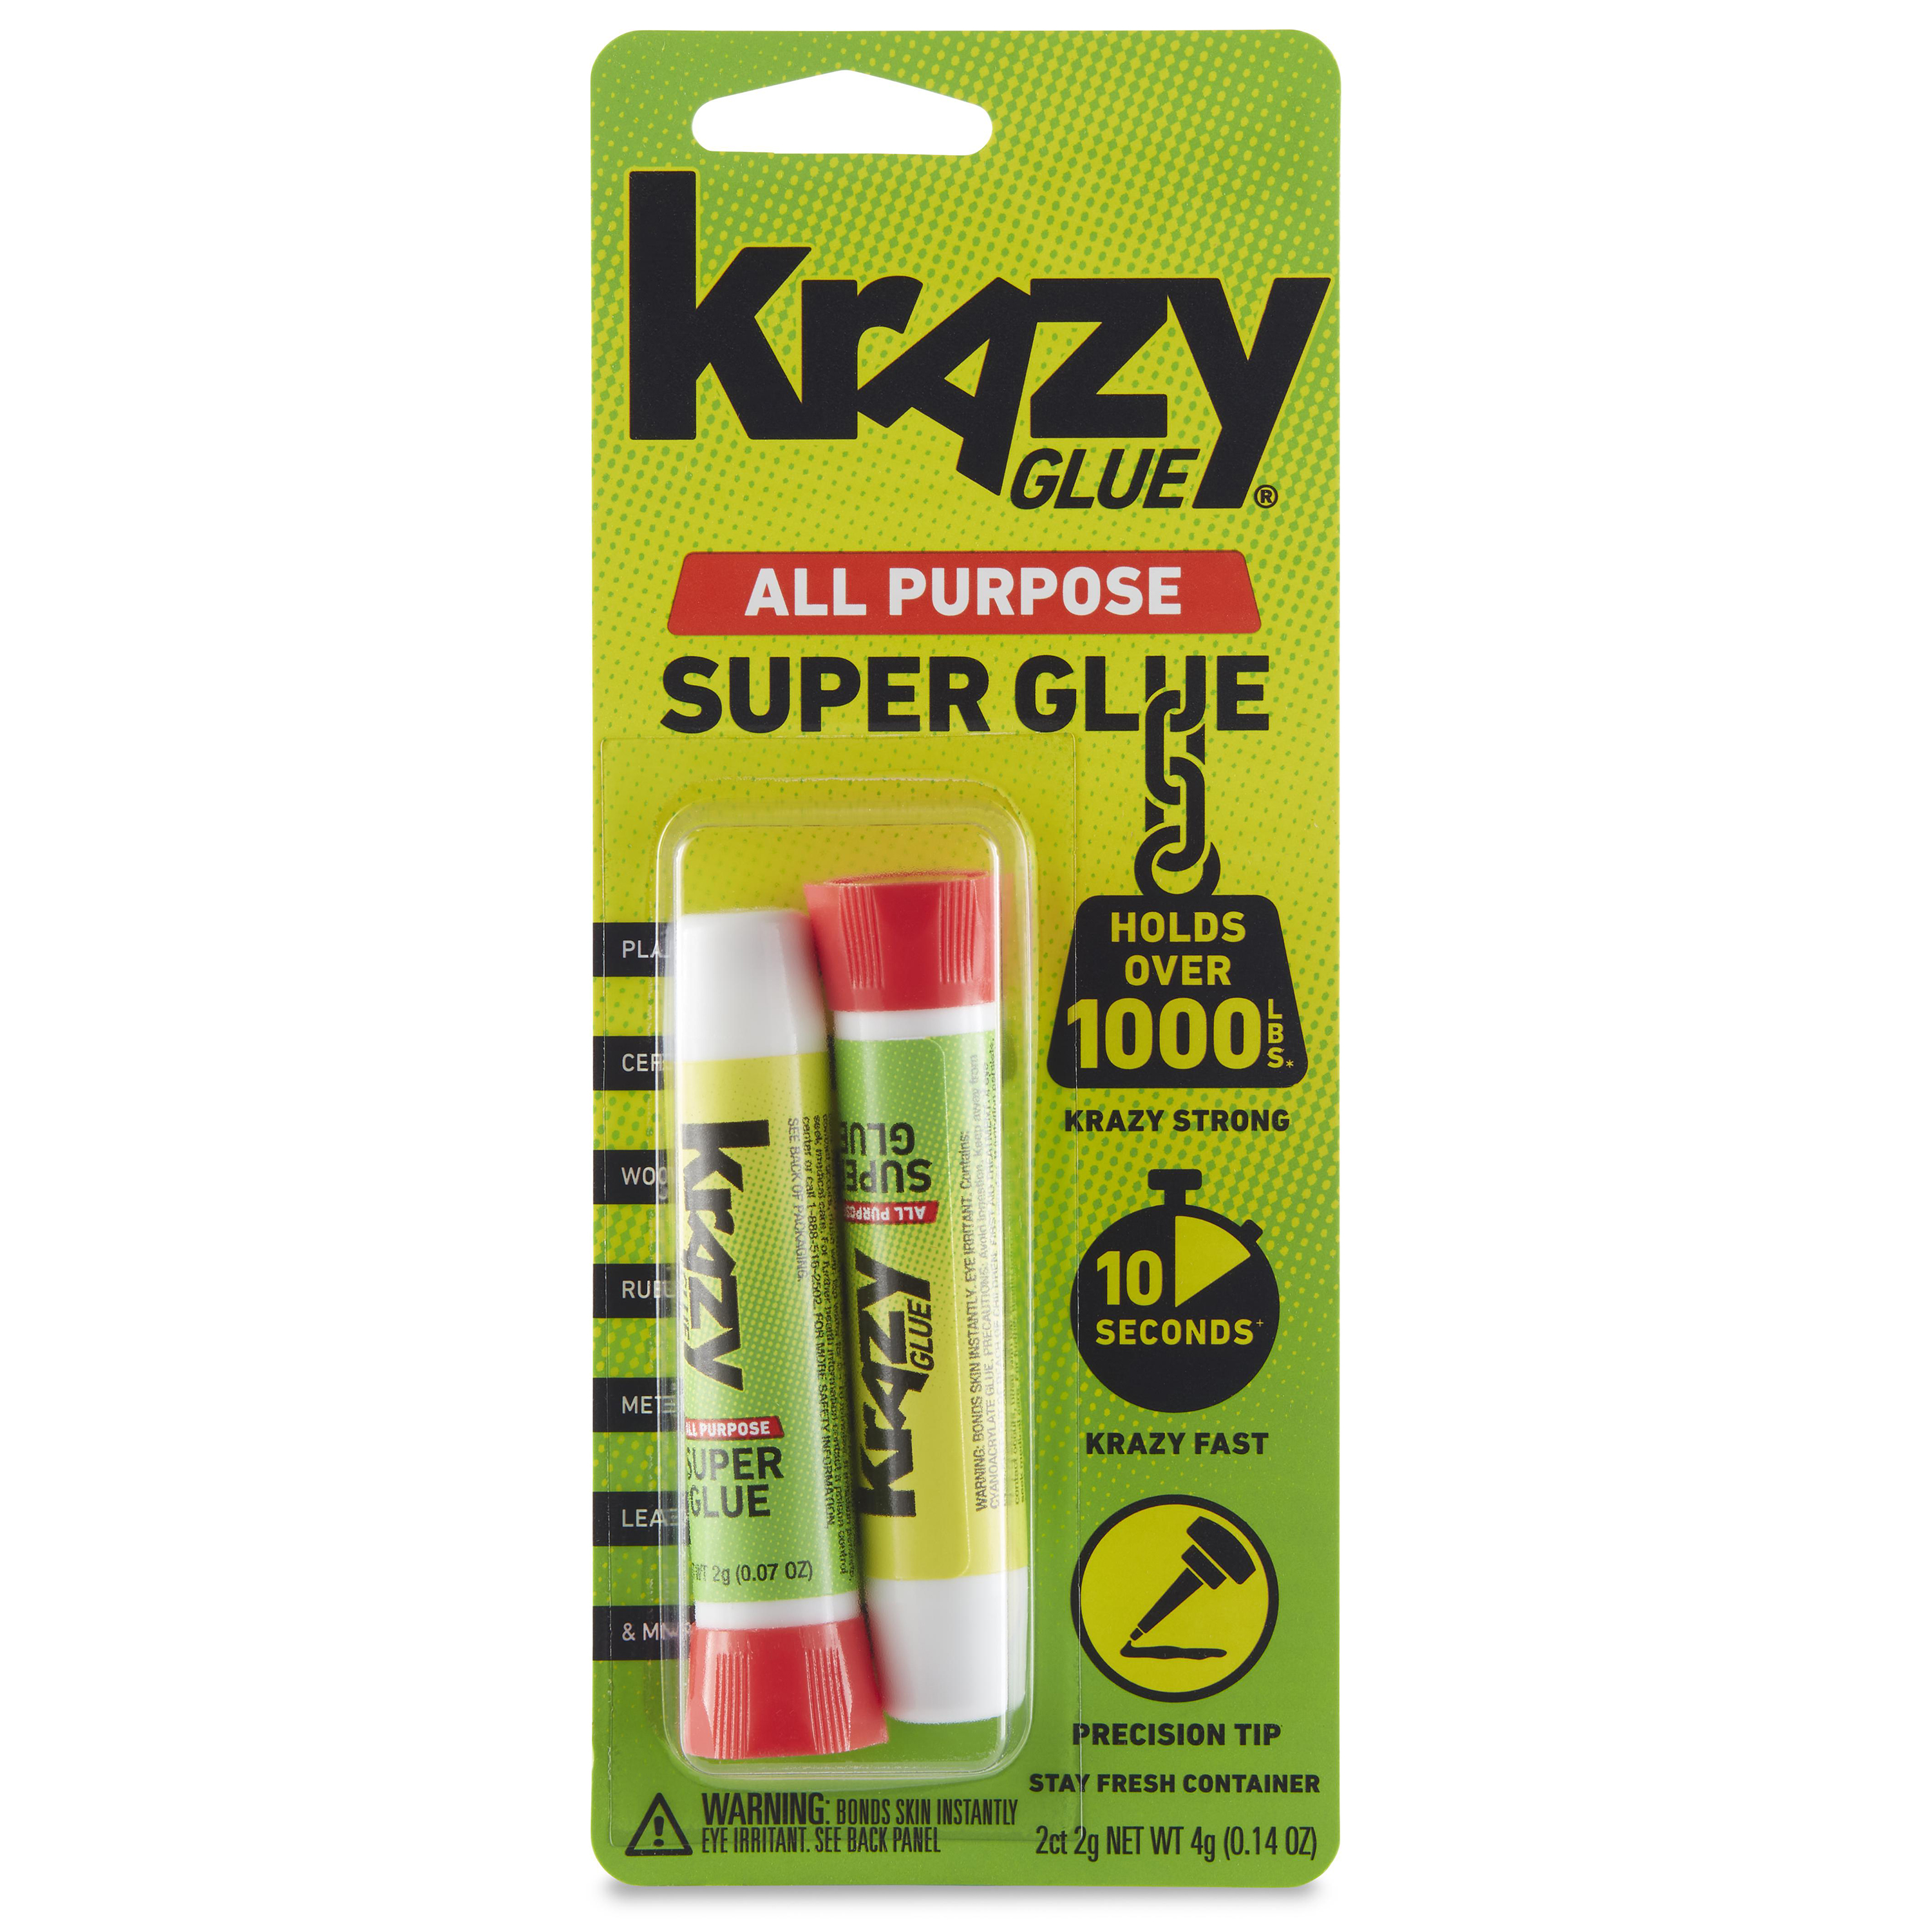 Krazy Glue, All Purpose Super Glue, Precision Tip, 2 g, 2 Count - image 1 of 7